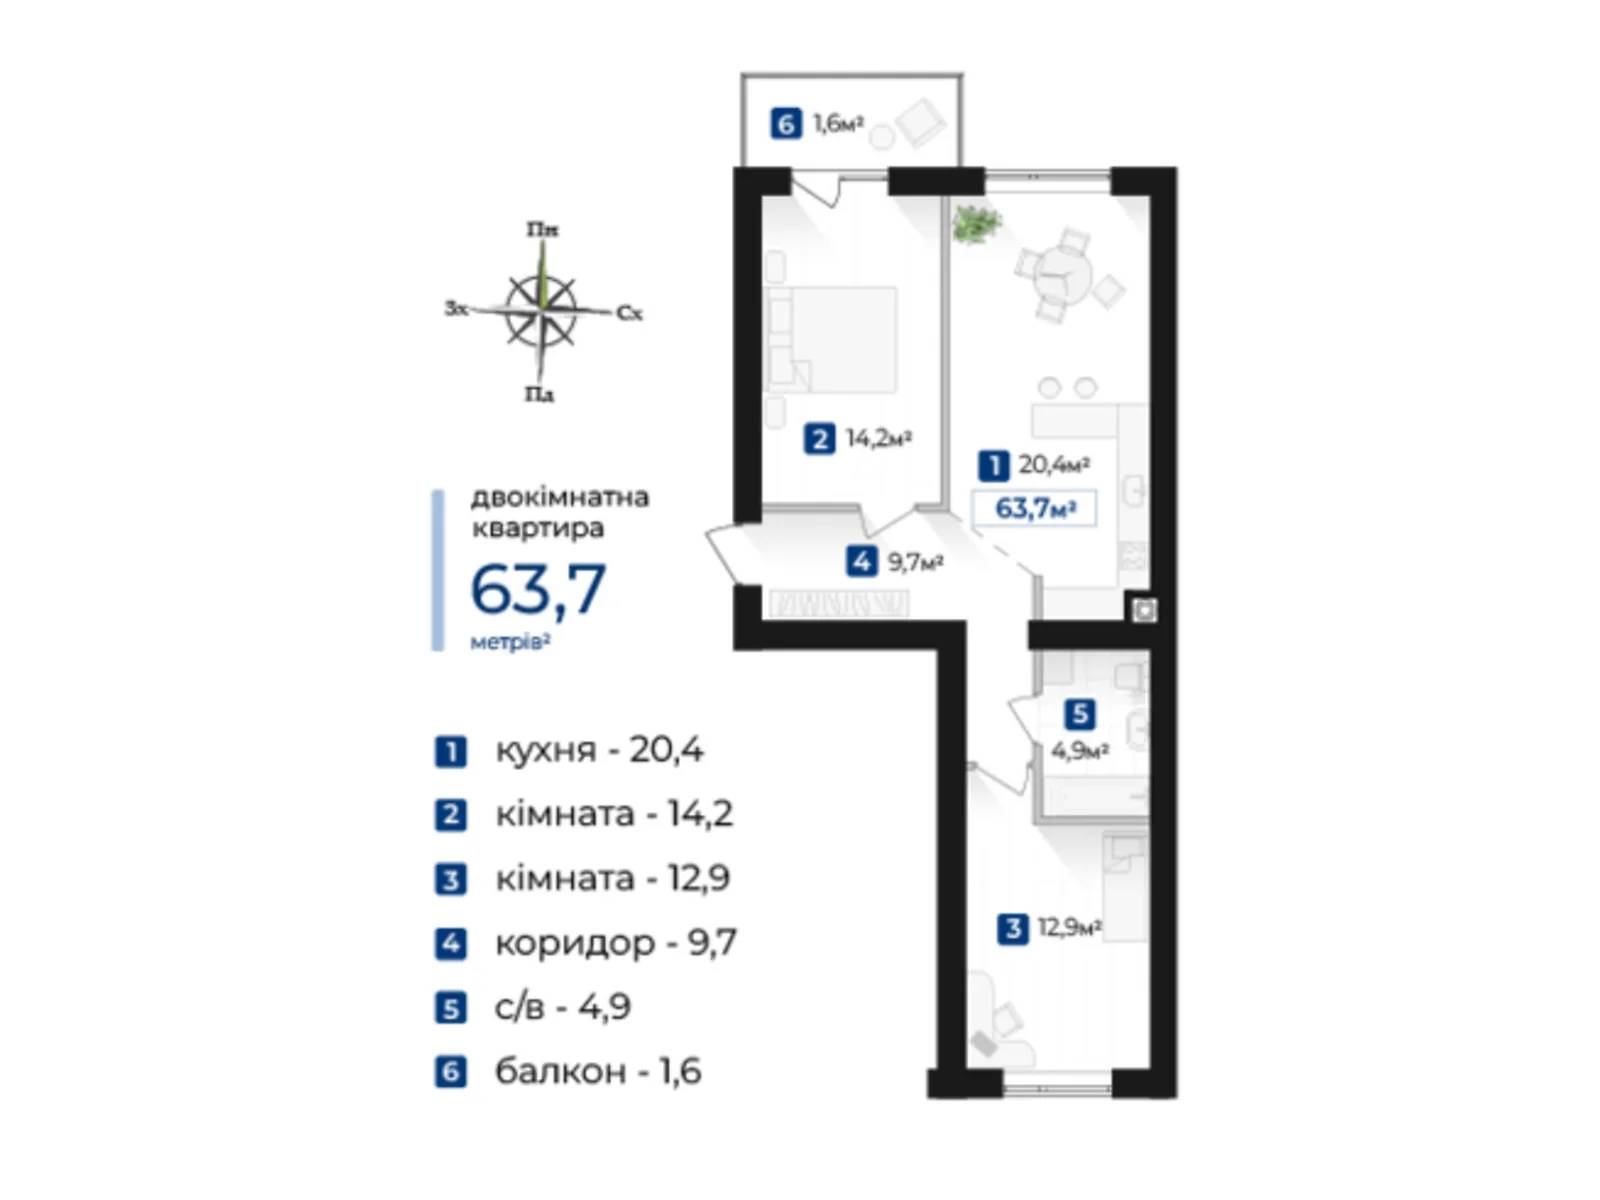 Продается 2-комнатная квартира 63.7 кв. м в Ивано-Франковске, цена: 54145 $